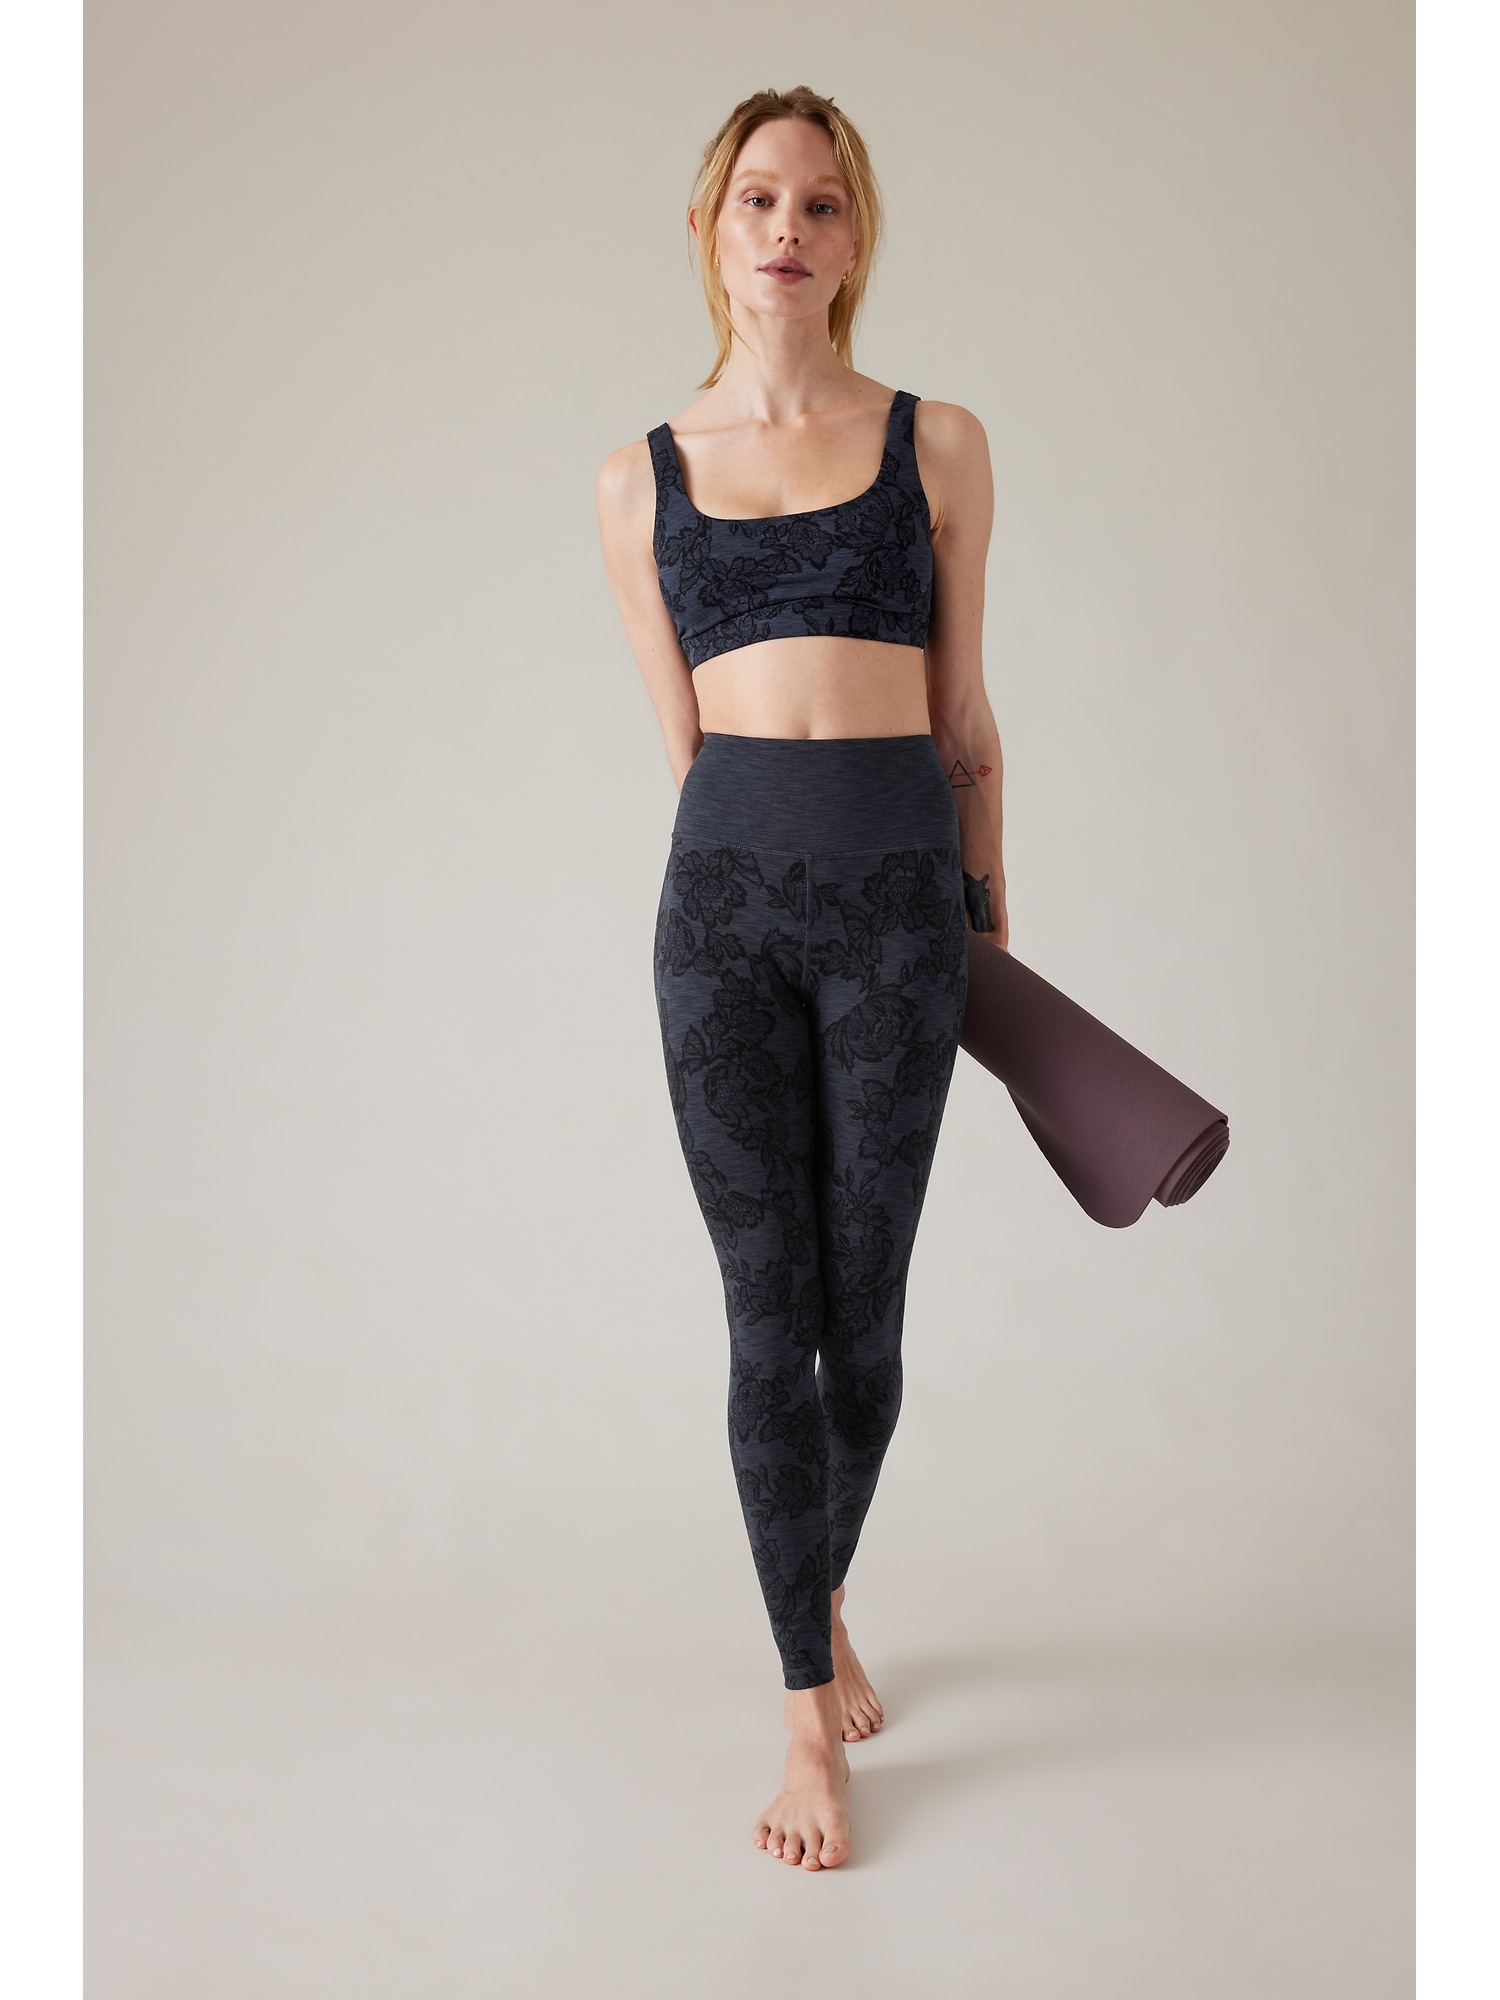 Yp1482 Yoga Clothes New Elastic Tight High Waist Hip Lifting